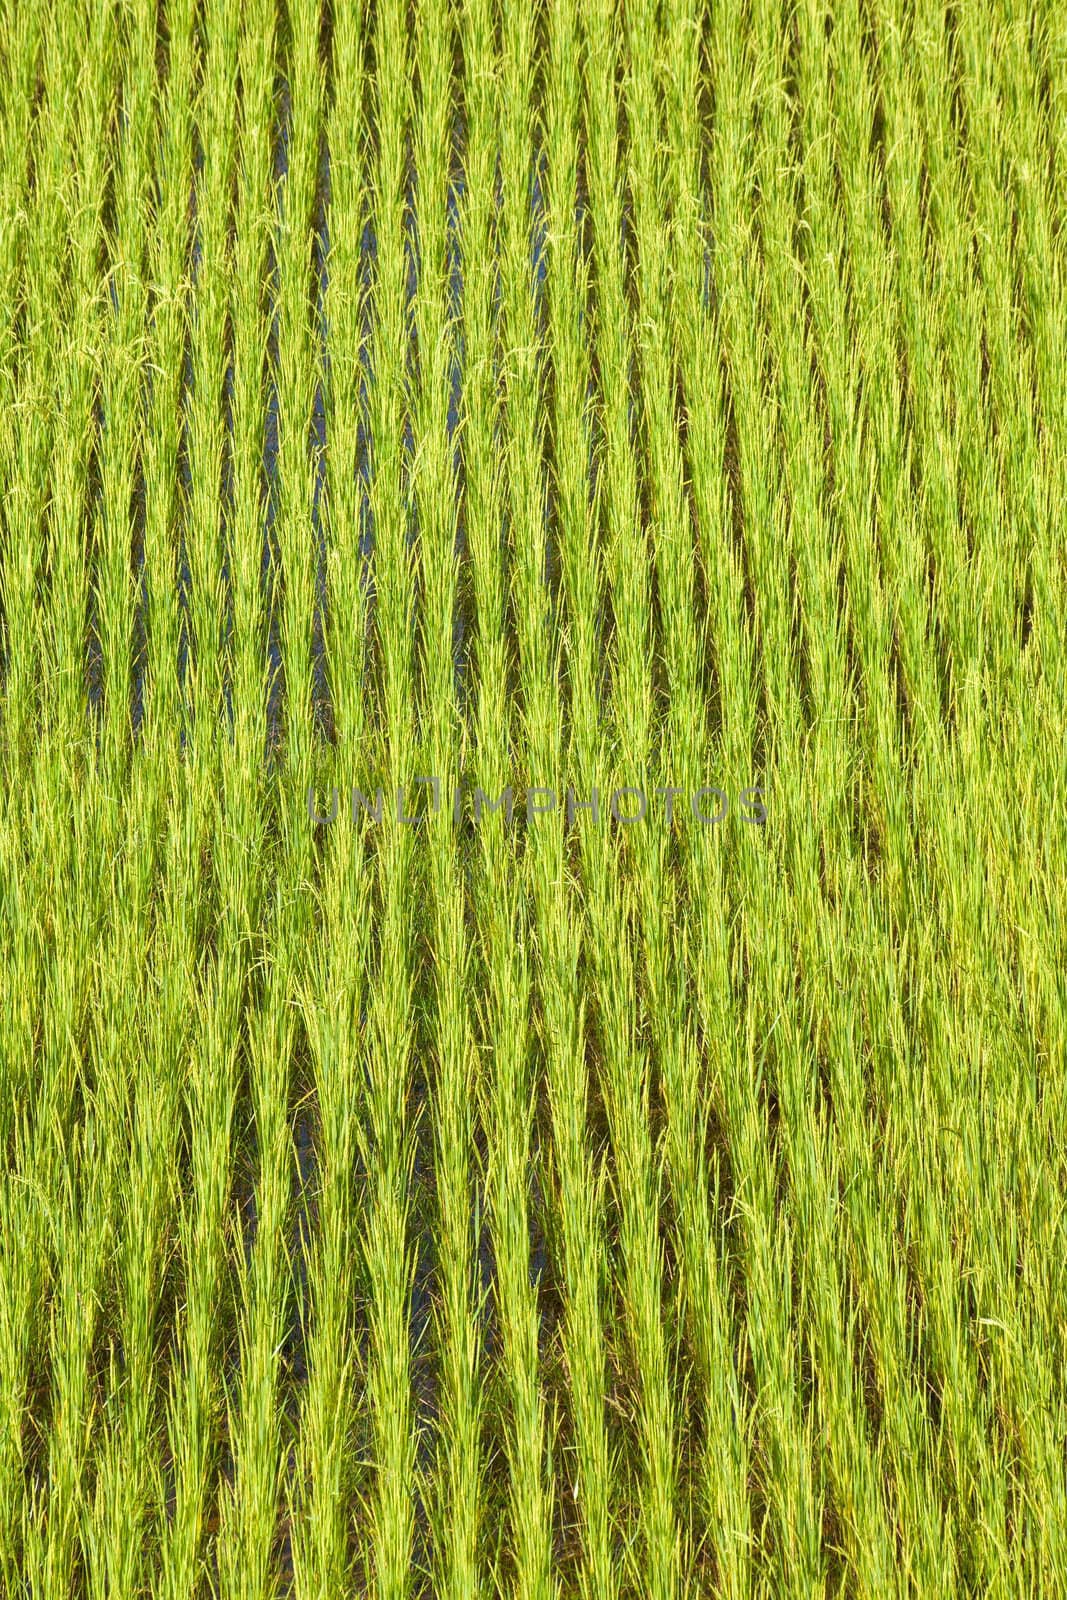 Paddy field background by pierivb